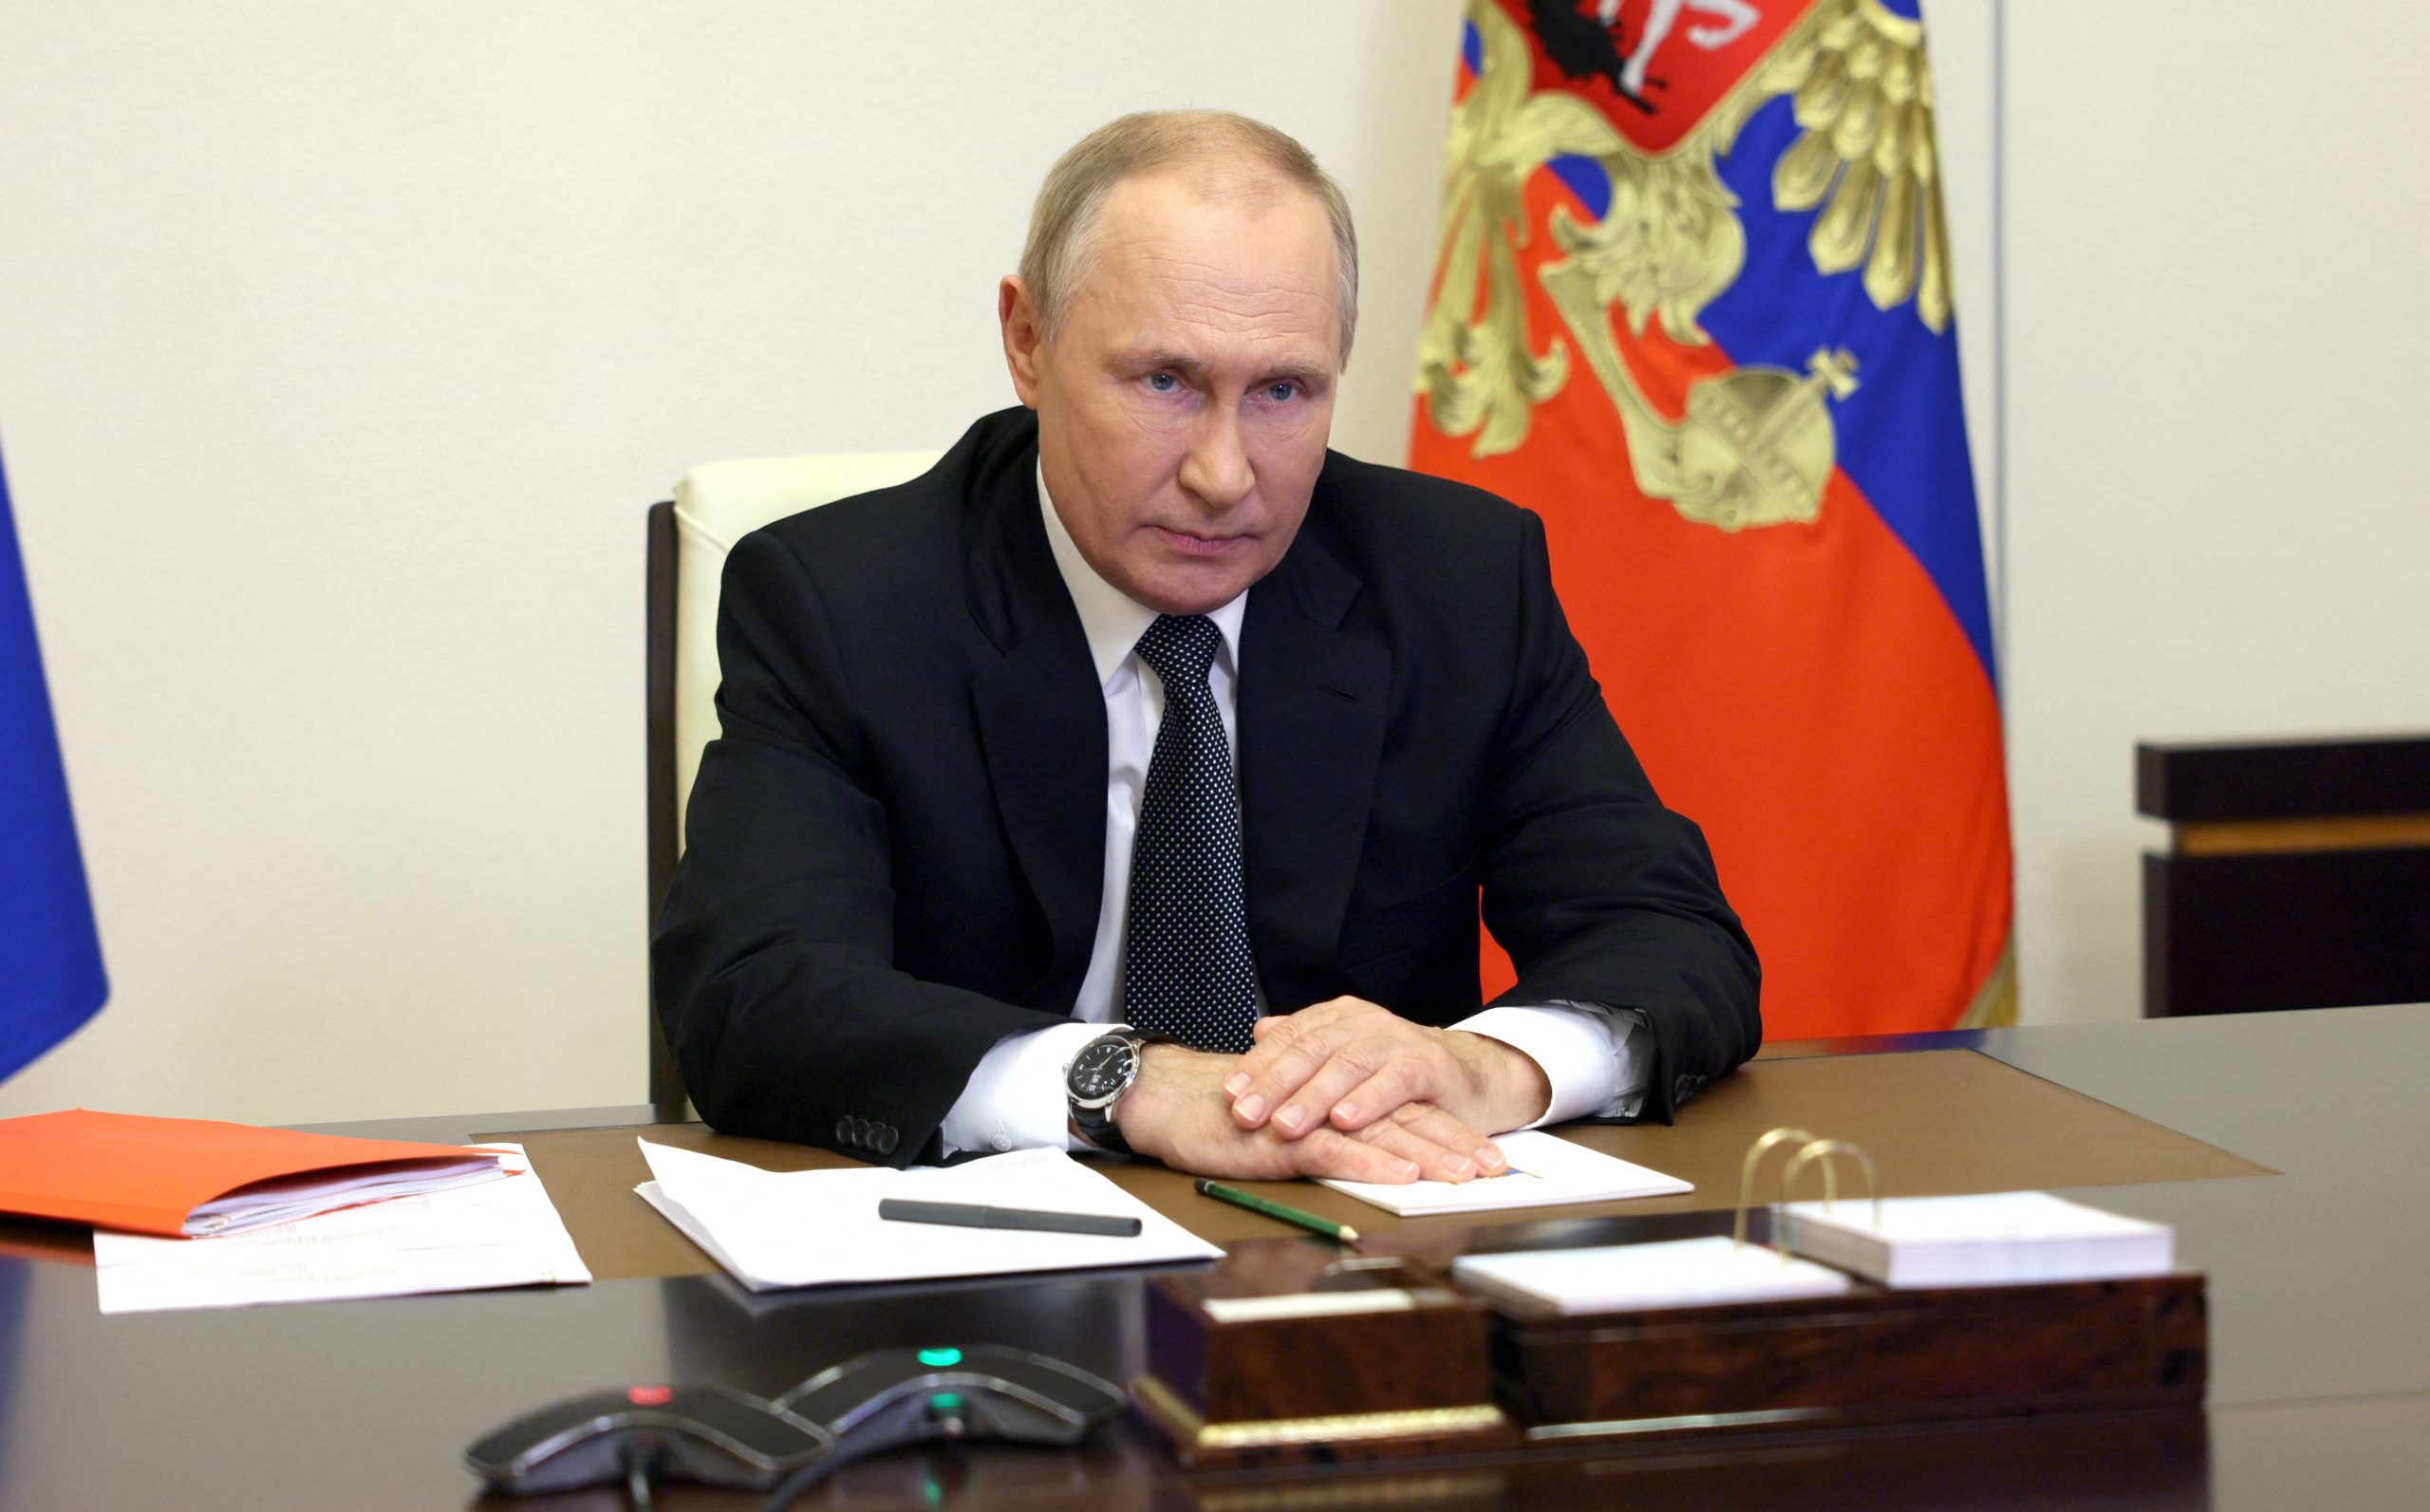 Putin declares martial law in occupied parts of Ukraine, boosts Russia's war footing